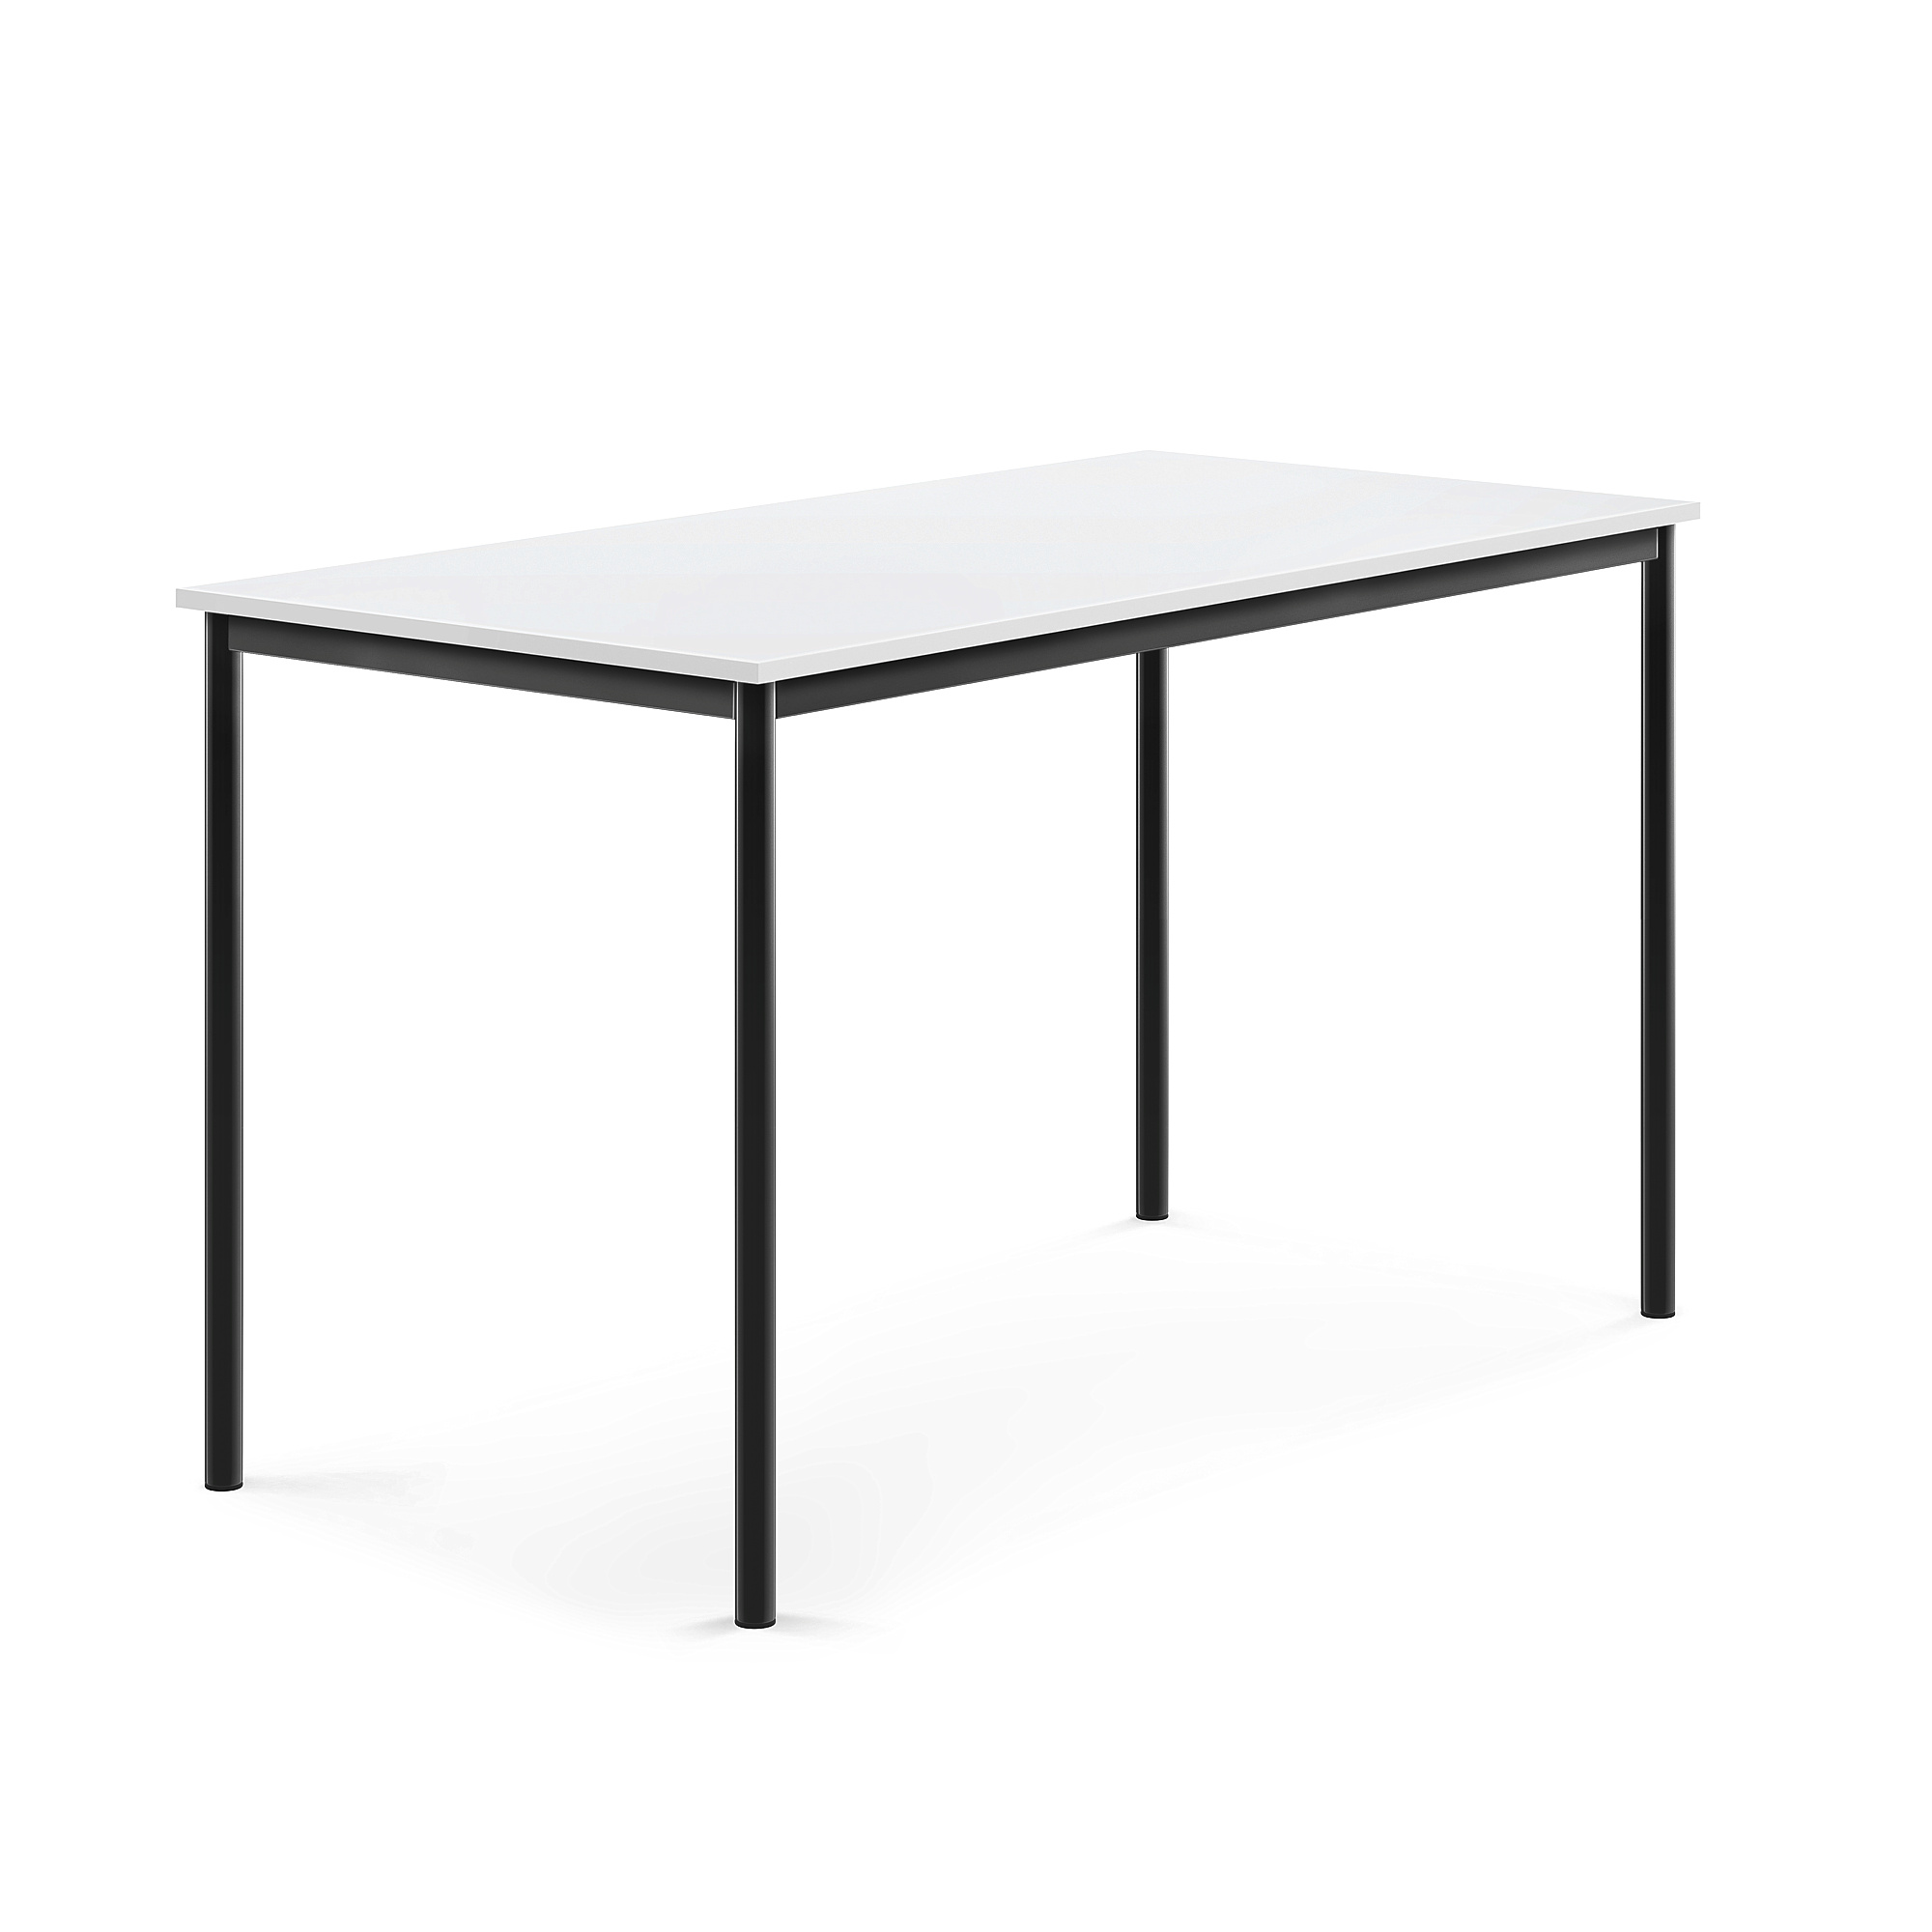 Stůl BORÅS, 1600x800x900 mm, antracitově šedé nohy, HPL deska, bílá